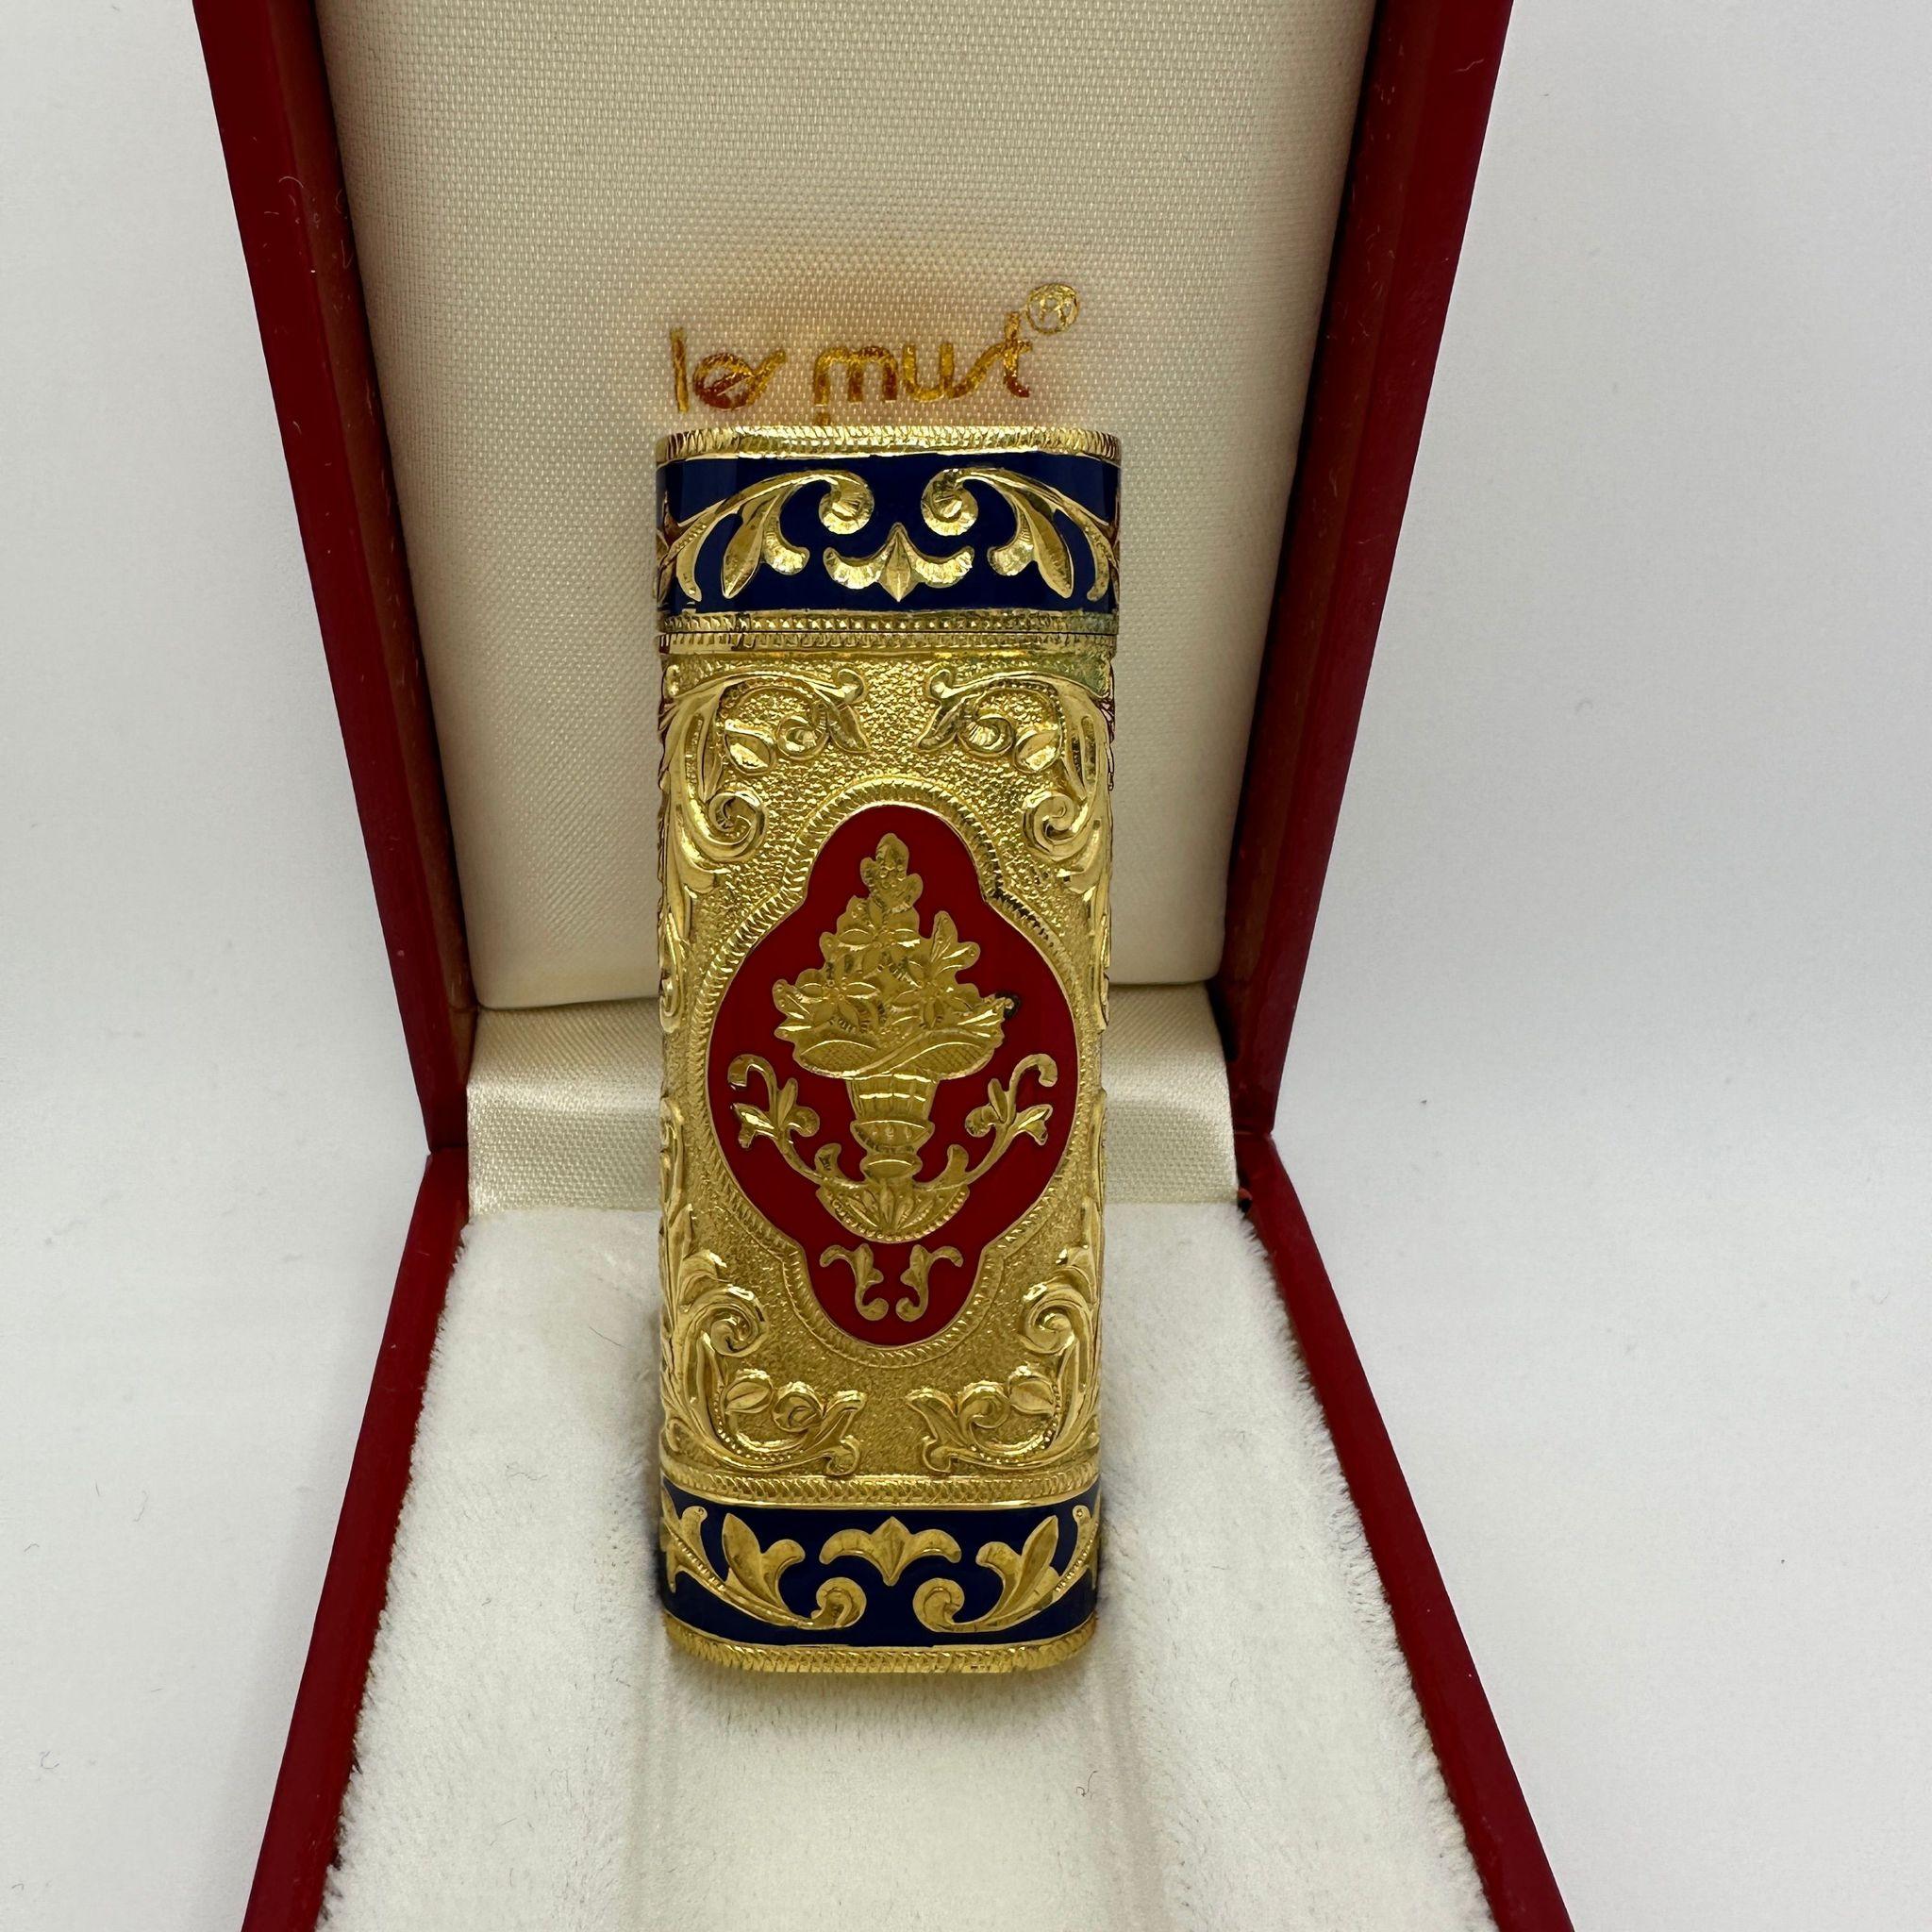 Le Must de Cartier Very Rare Royking Lighter, 18k Gold Plating & Enamel Inlay  4